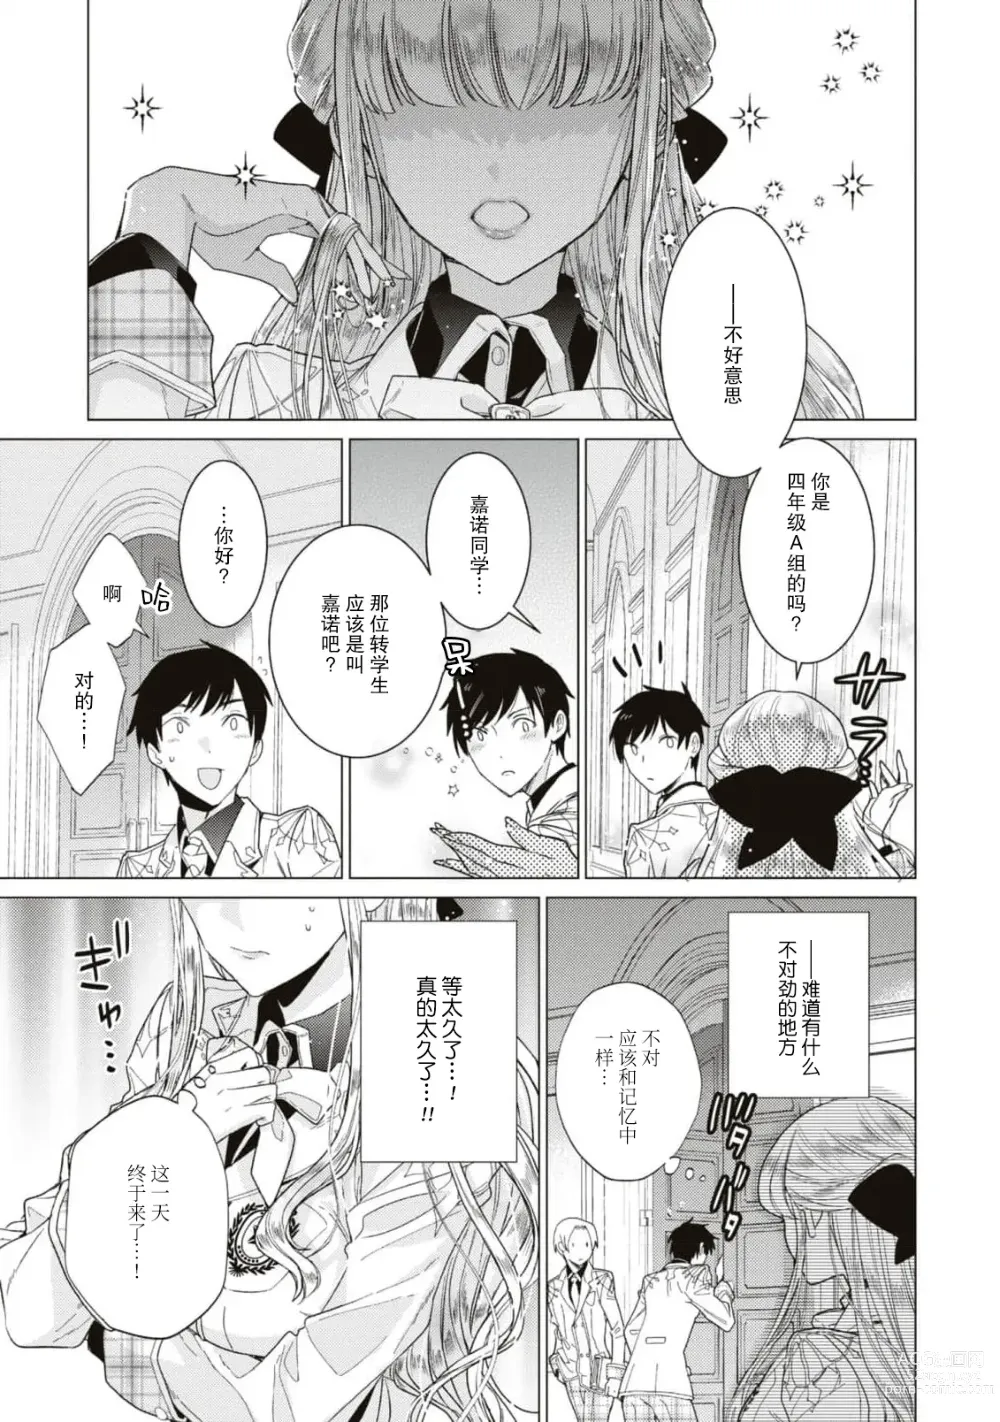 Page 5 of manga 全力扮演恶役大小姐的我，却遇上变成邻国王子的性转主人公